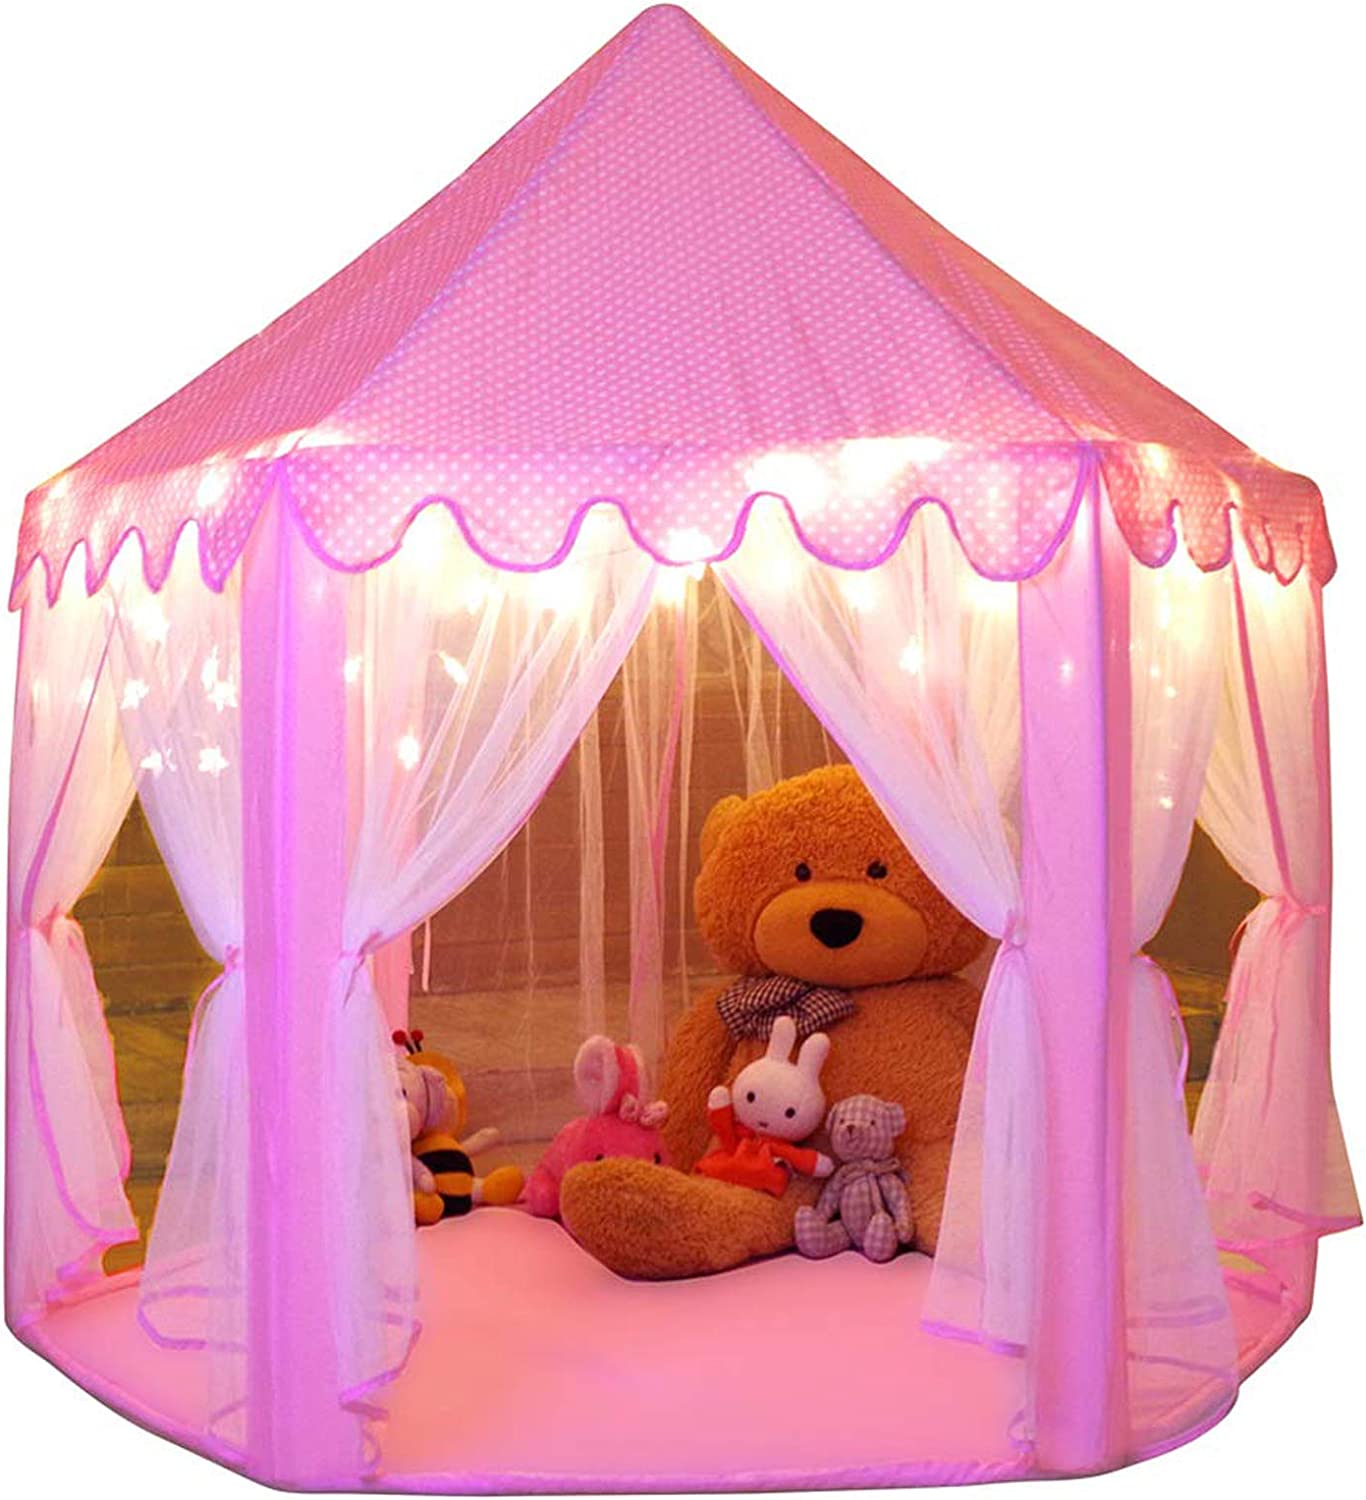  9. Monobeach Princess Tent Girls Large Playhouse Kids 